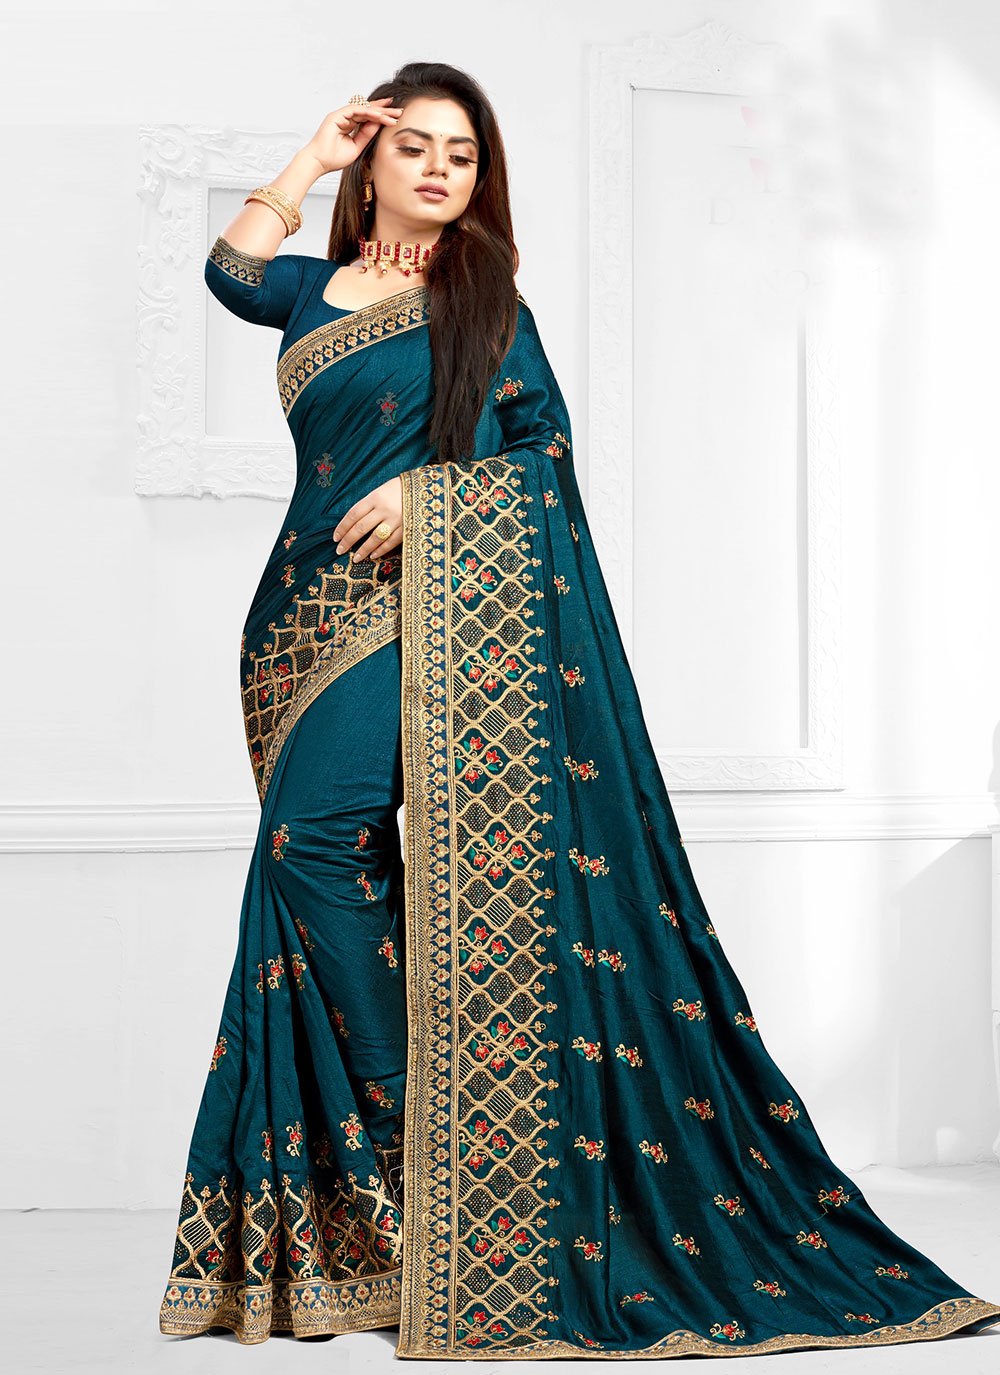 Reception Sarees - Buy Latest Collection of Reception Saris